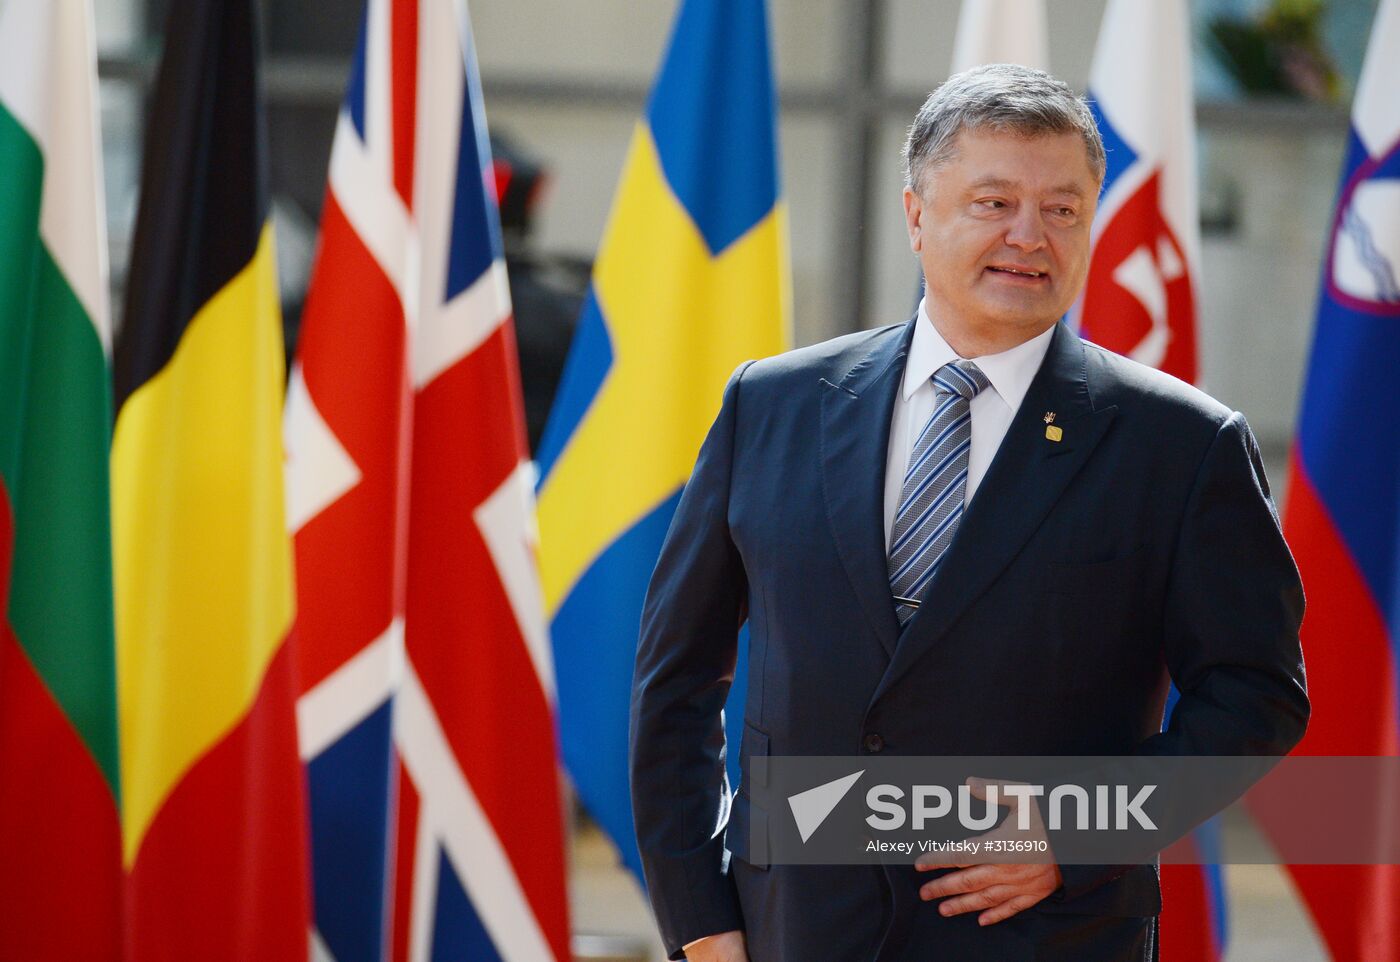 Ukrainian President Petro Poroshenko meets with European Council President Donald Tusk